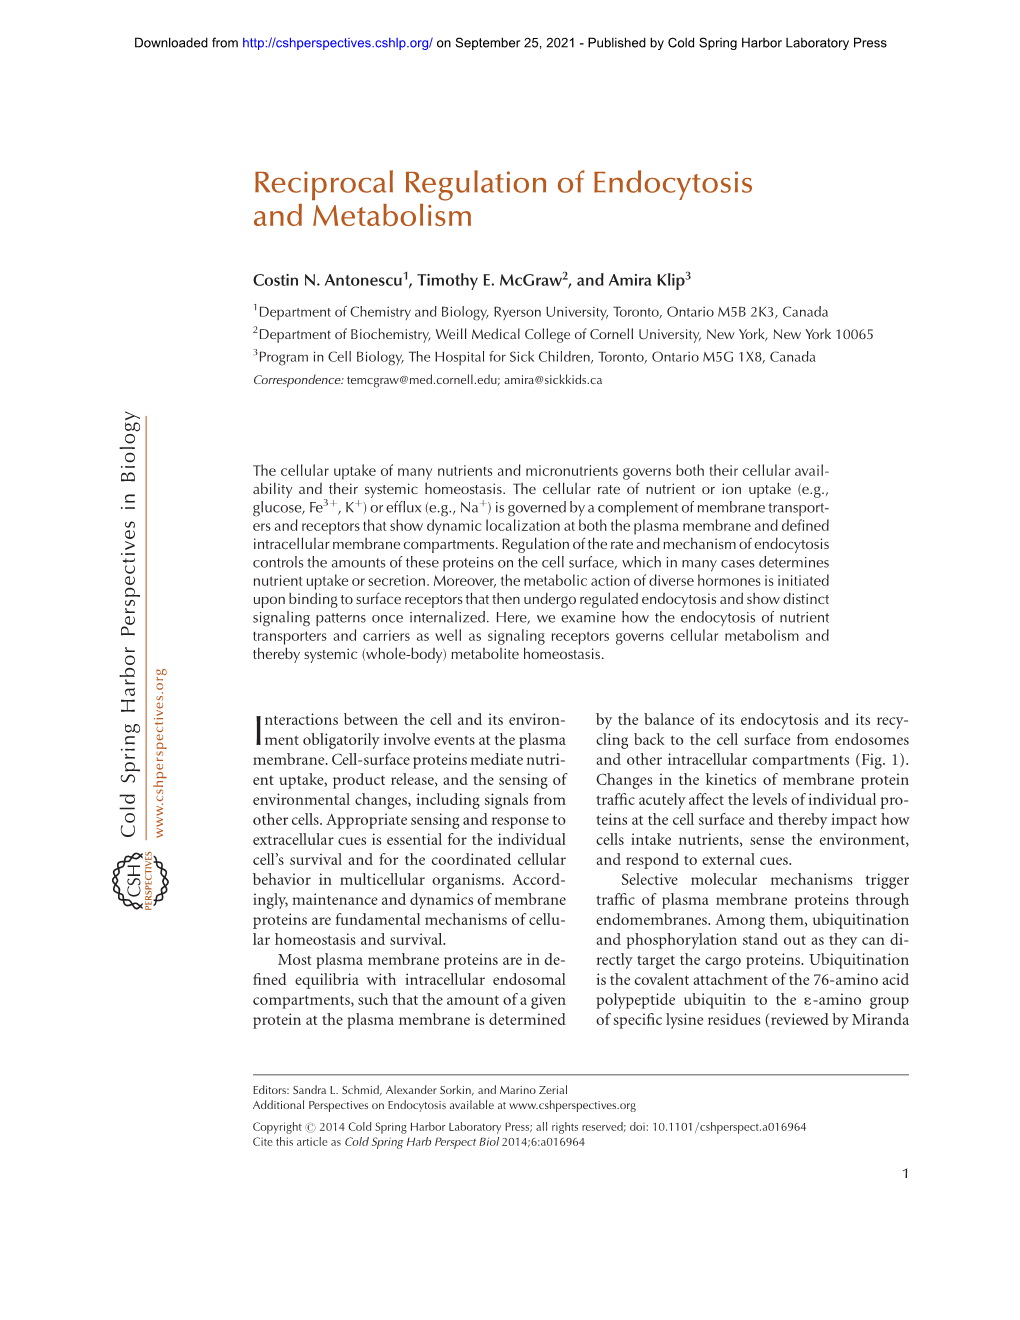 Reciprocal Regulation of Endocytosis and Metabolism